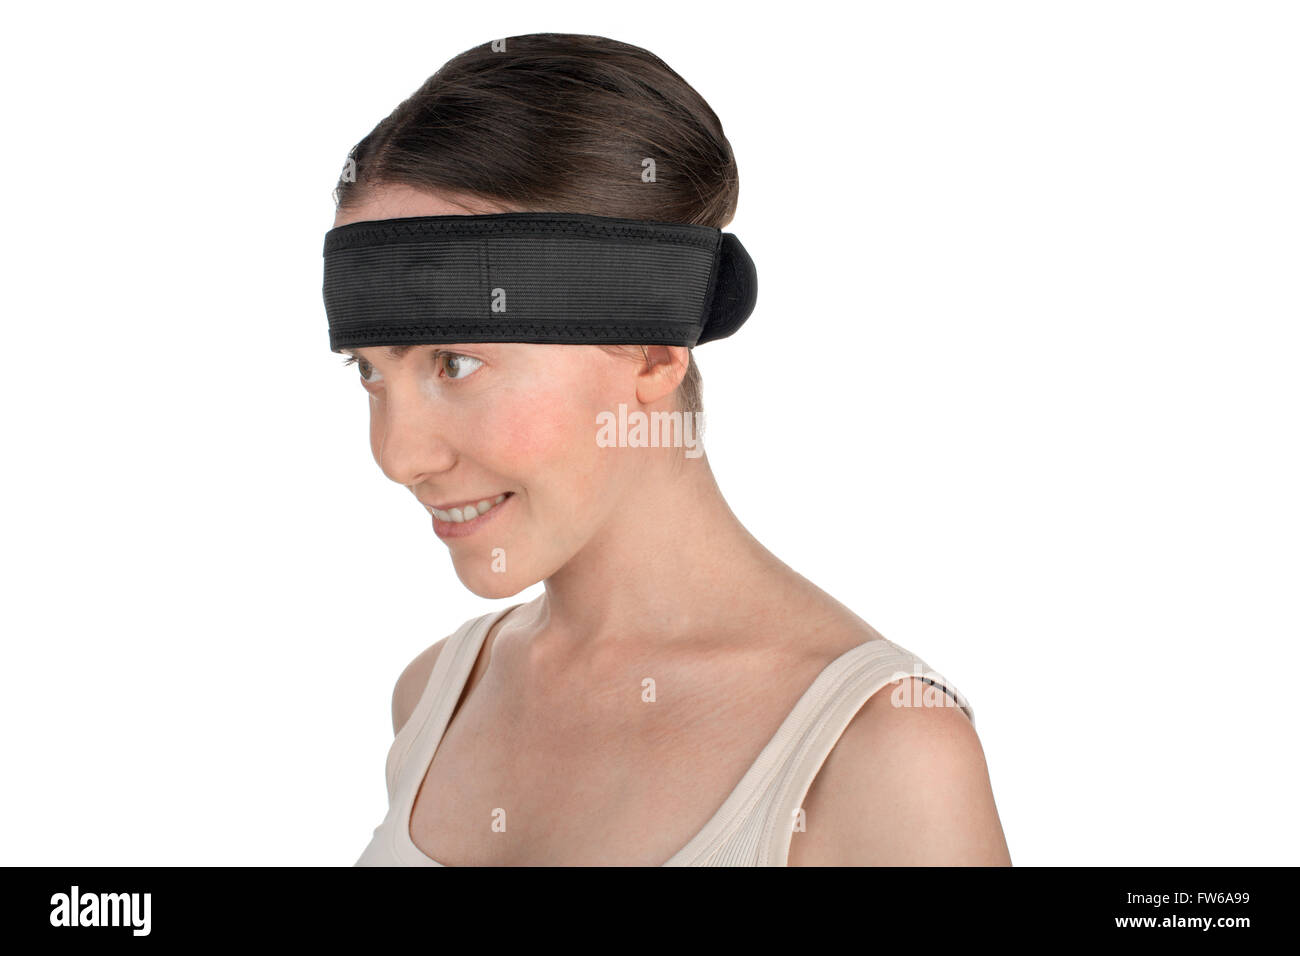 Woman with a sports headband Stock Photo